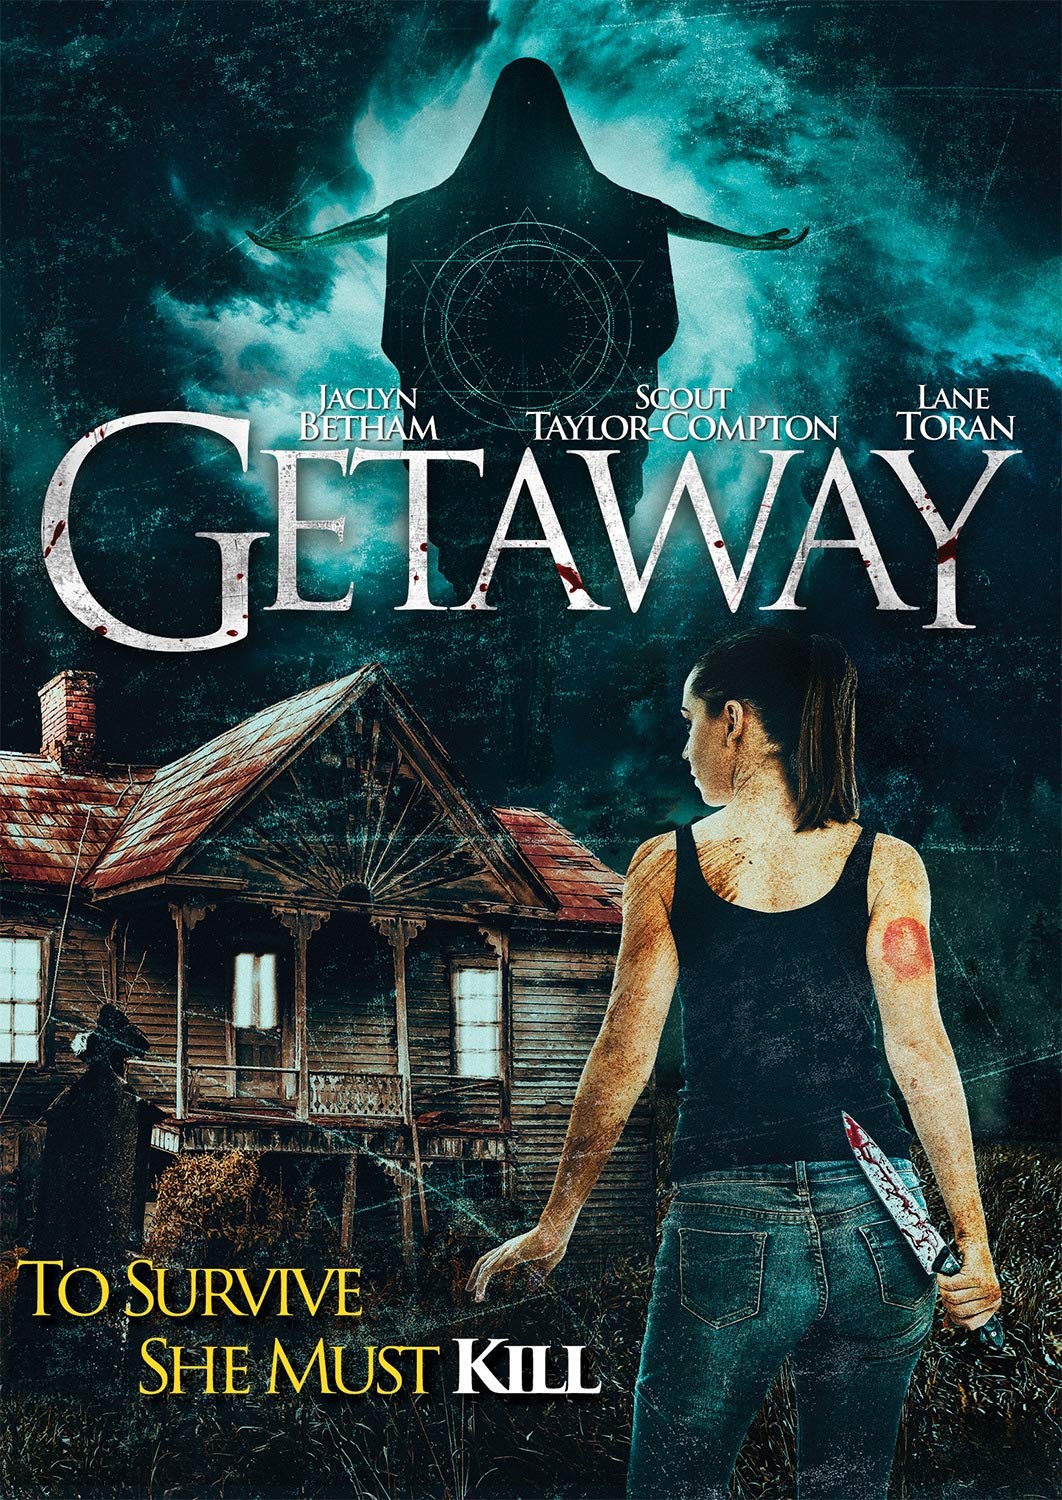 Getaway - Darkside Records